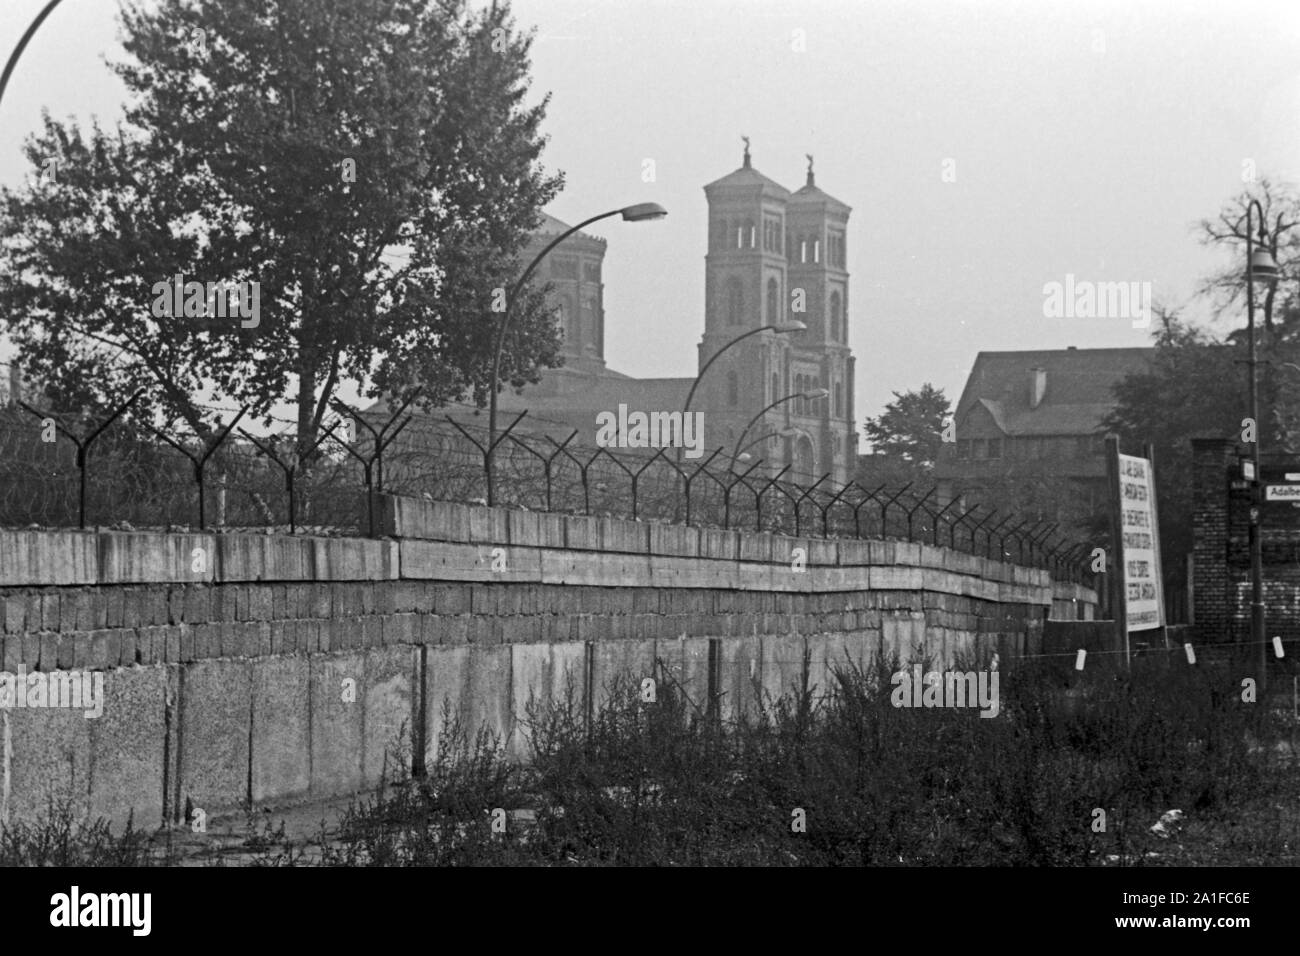 Blick aus dem amerikanischen Sektor auf die Thomaskirche in Berlin Kreuzberg, Deutschland 1962. View from the American sector to the Thomaskirche church at Berlin Kreuzberg, Germany 1962. Stock Photo